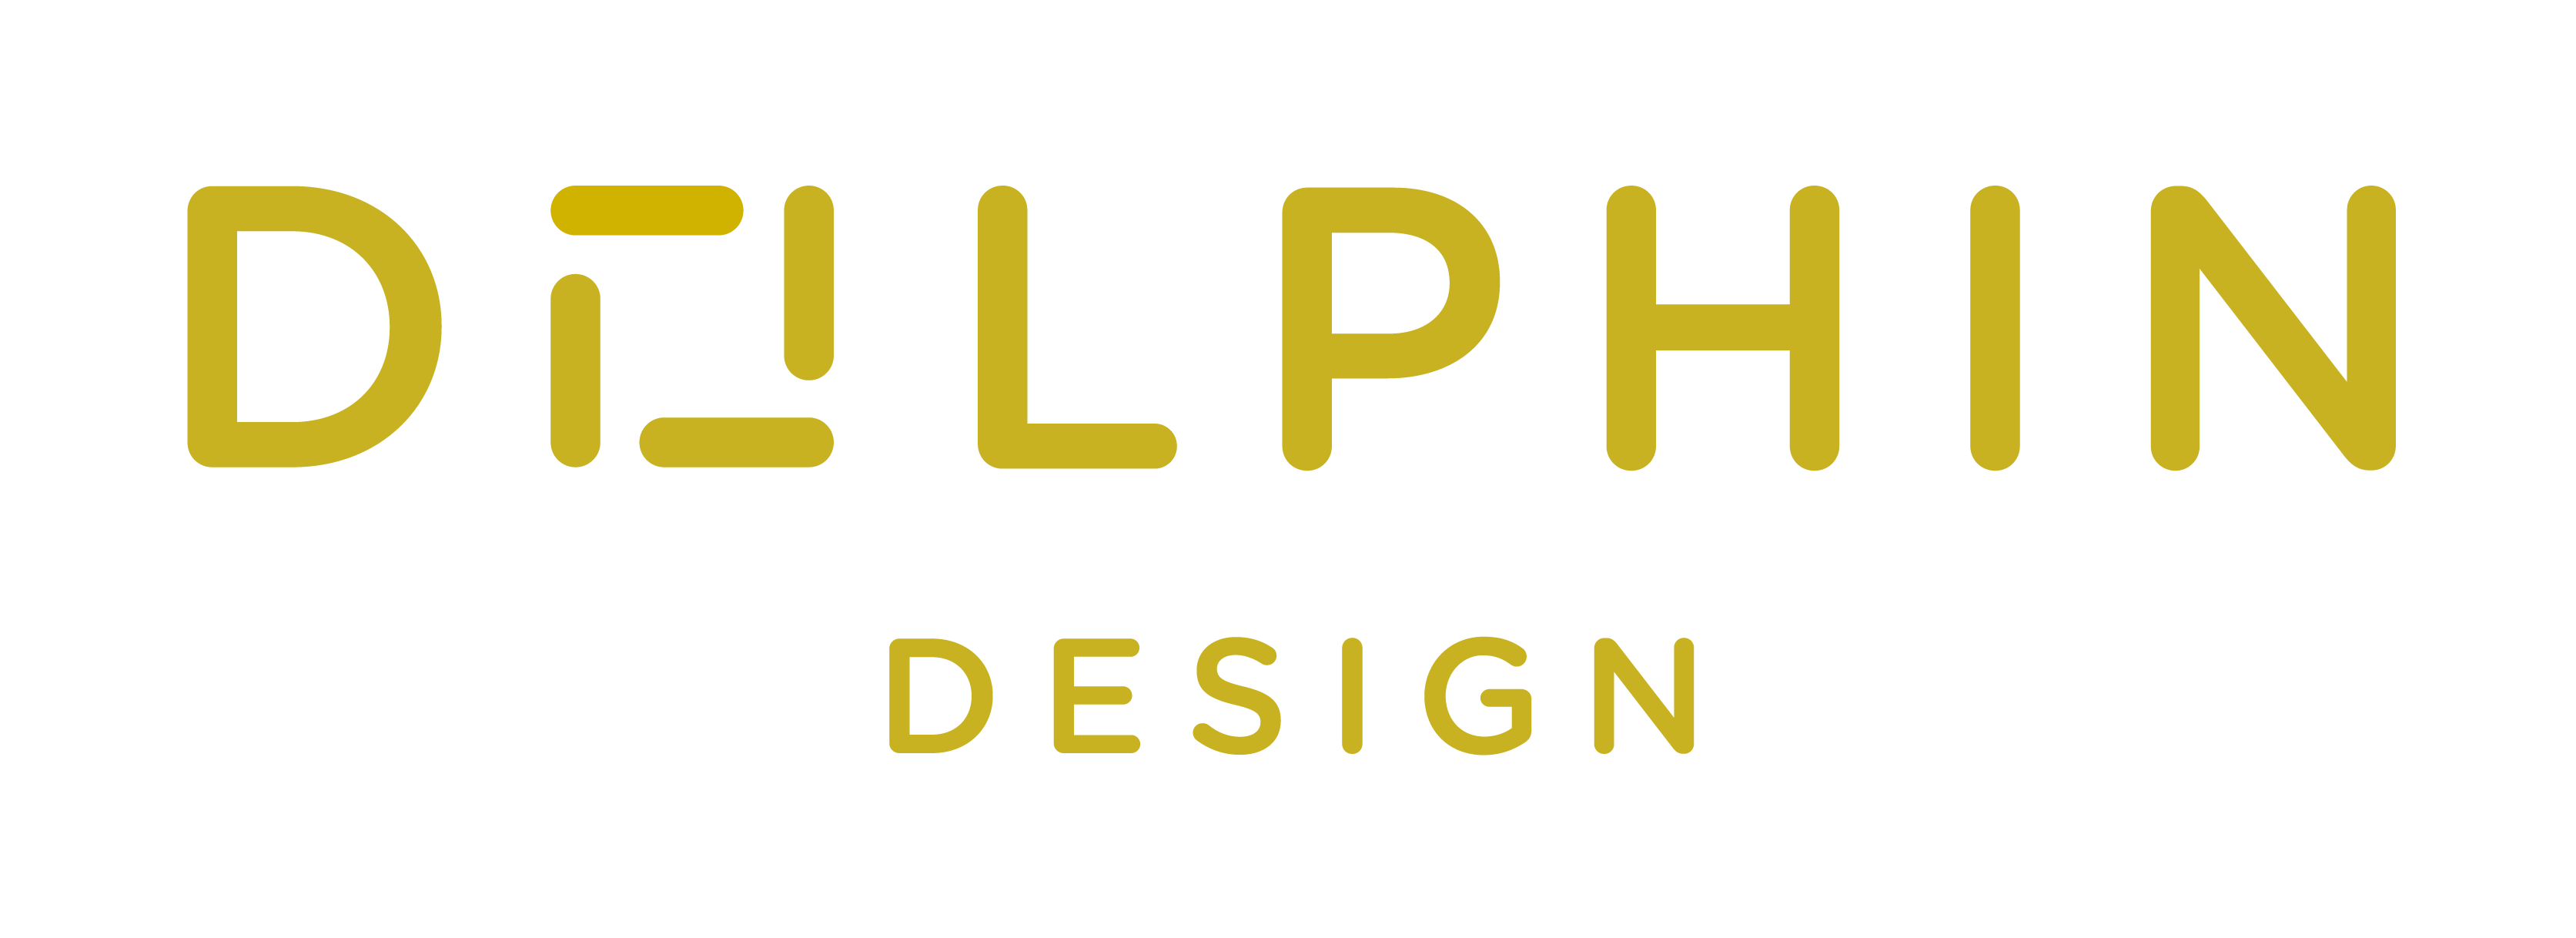 DOLPHIN_Design_2019